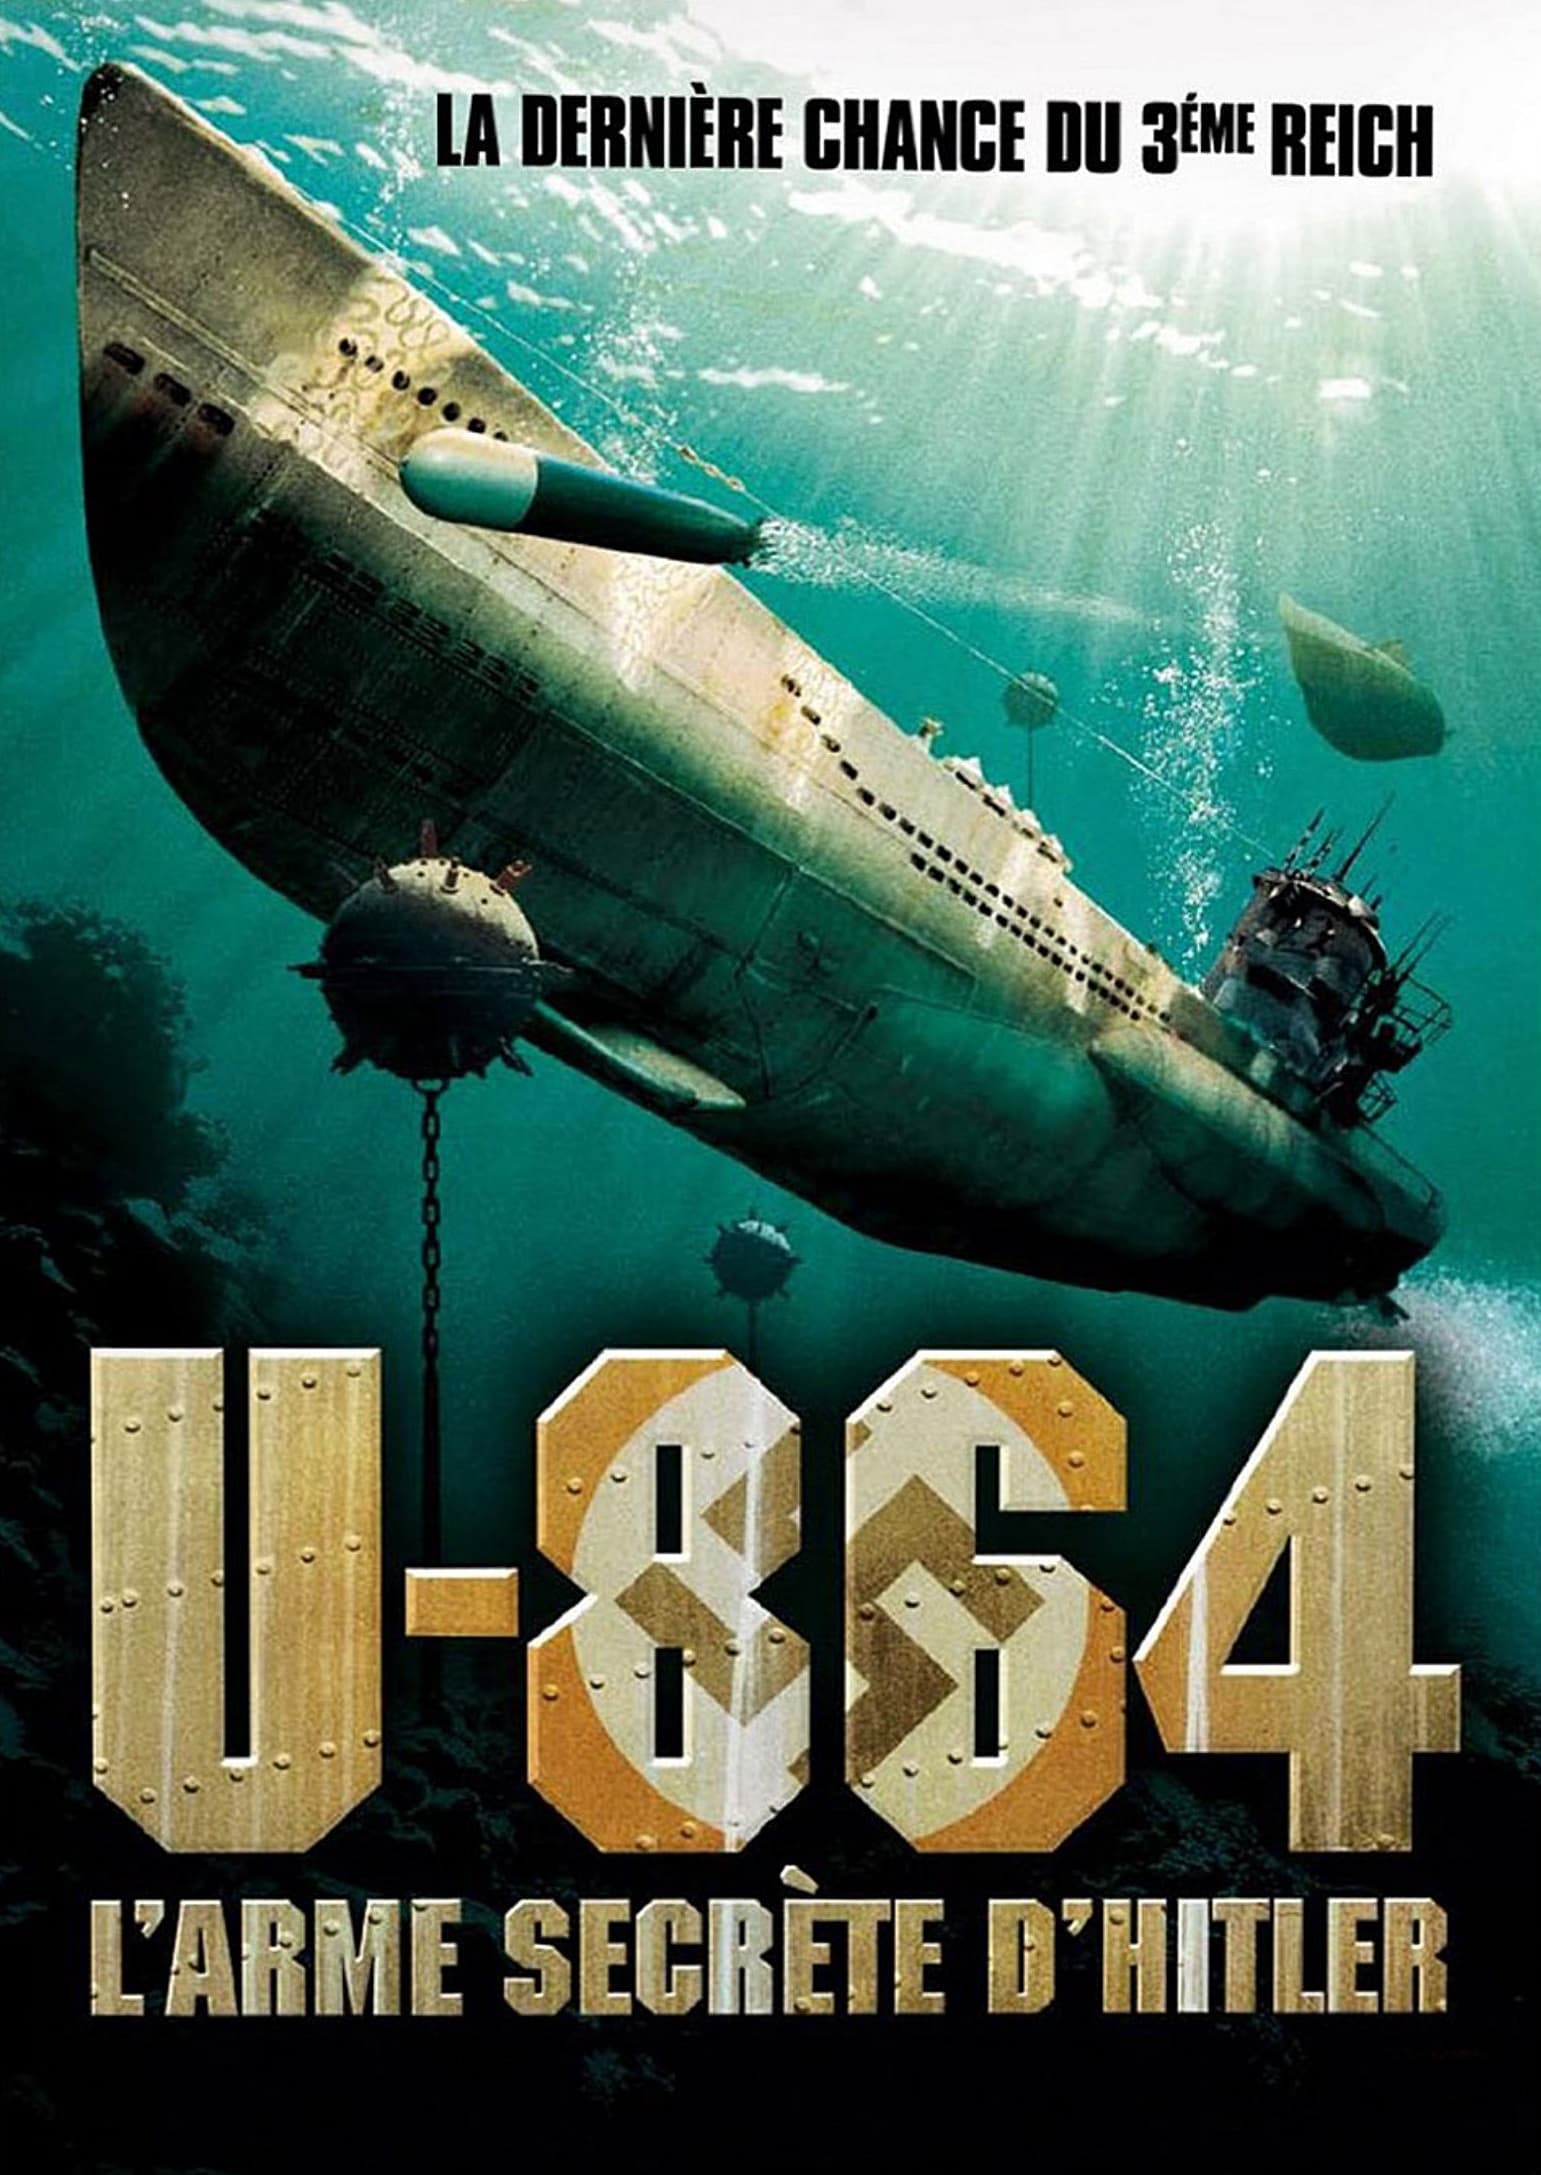 U-864, l'arme secrète d'Hitler